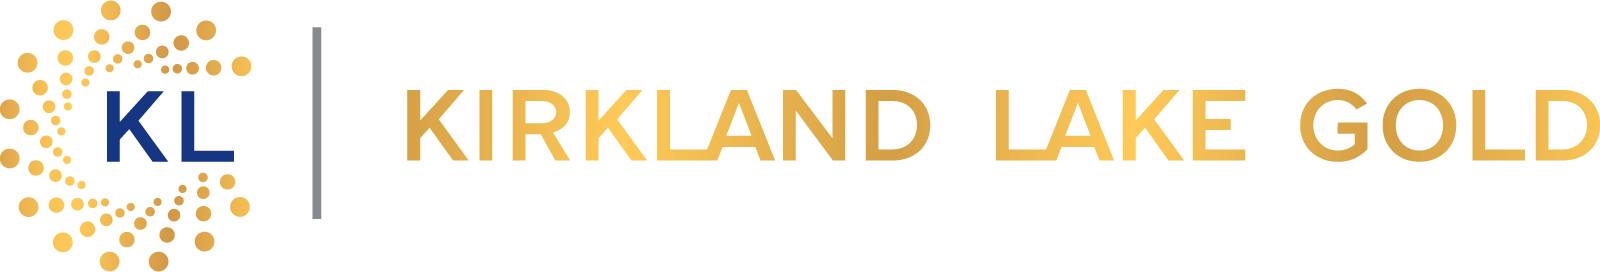 Kirkland-Lago-Oro